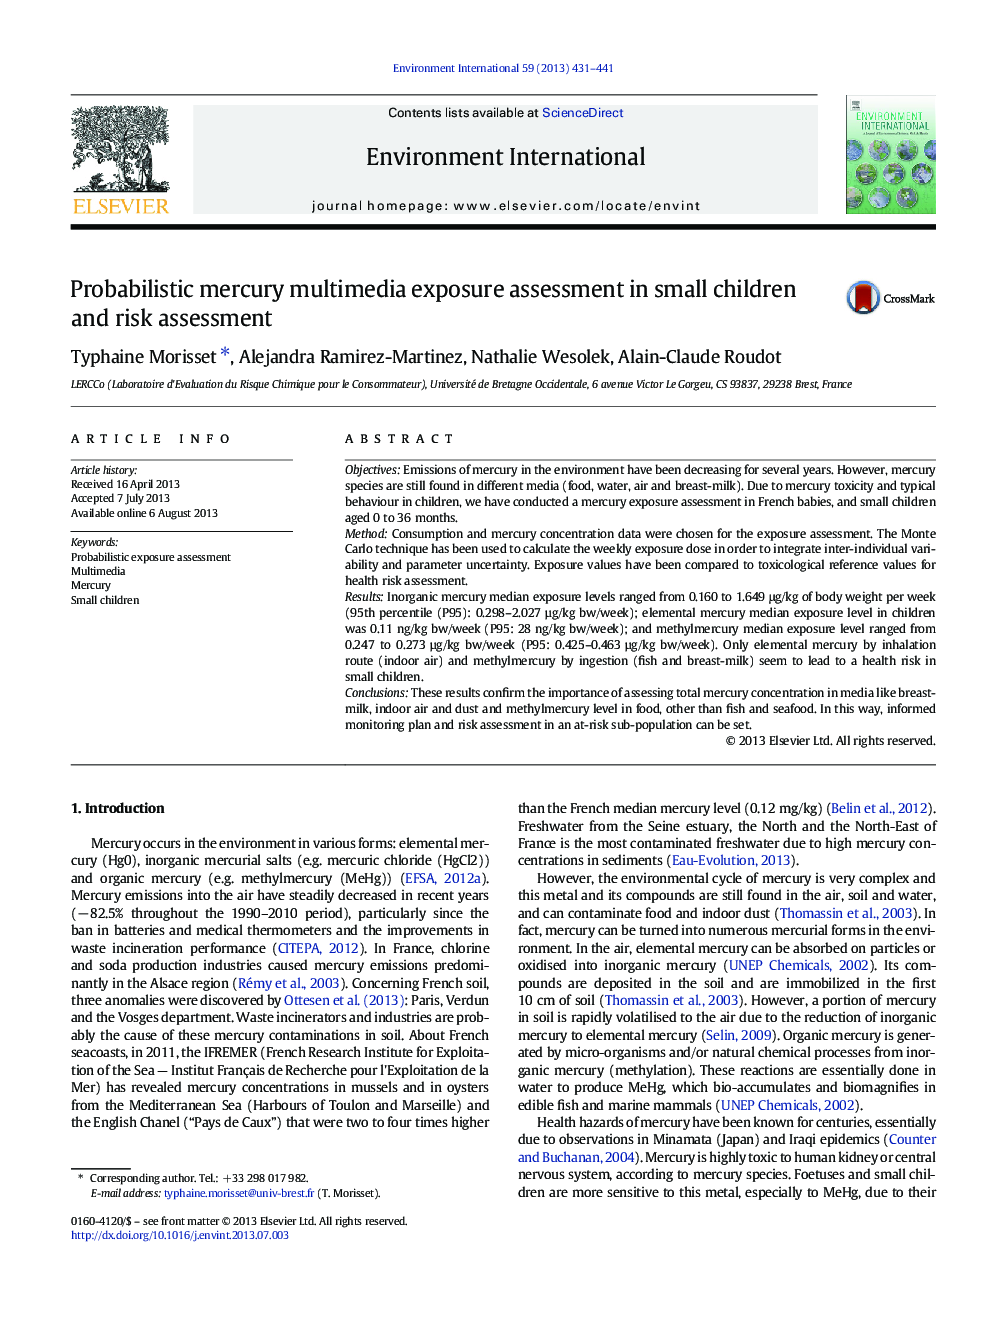 Probabilistic mercury multimedia exposure assessment in small children and risk assessment